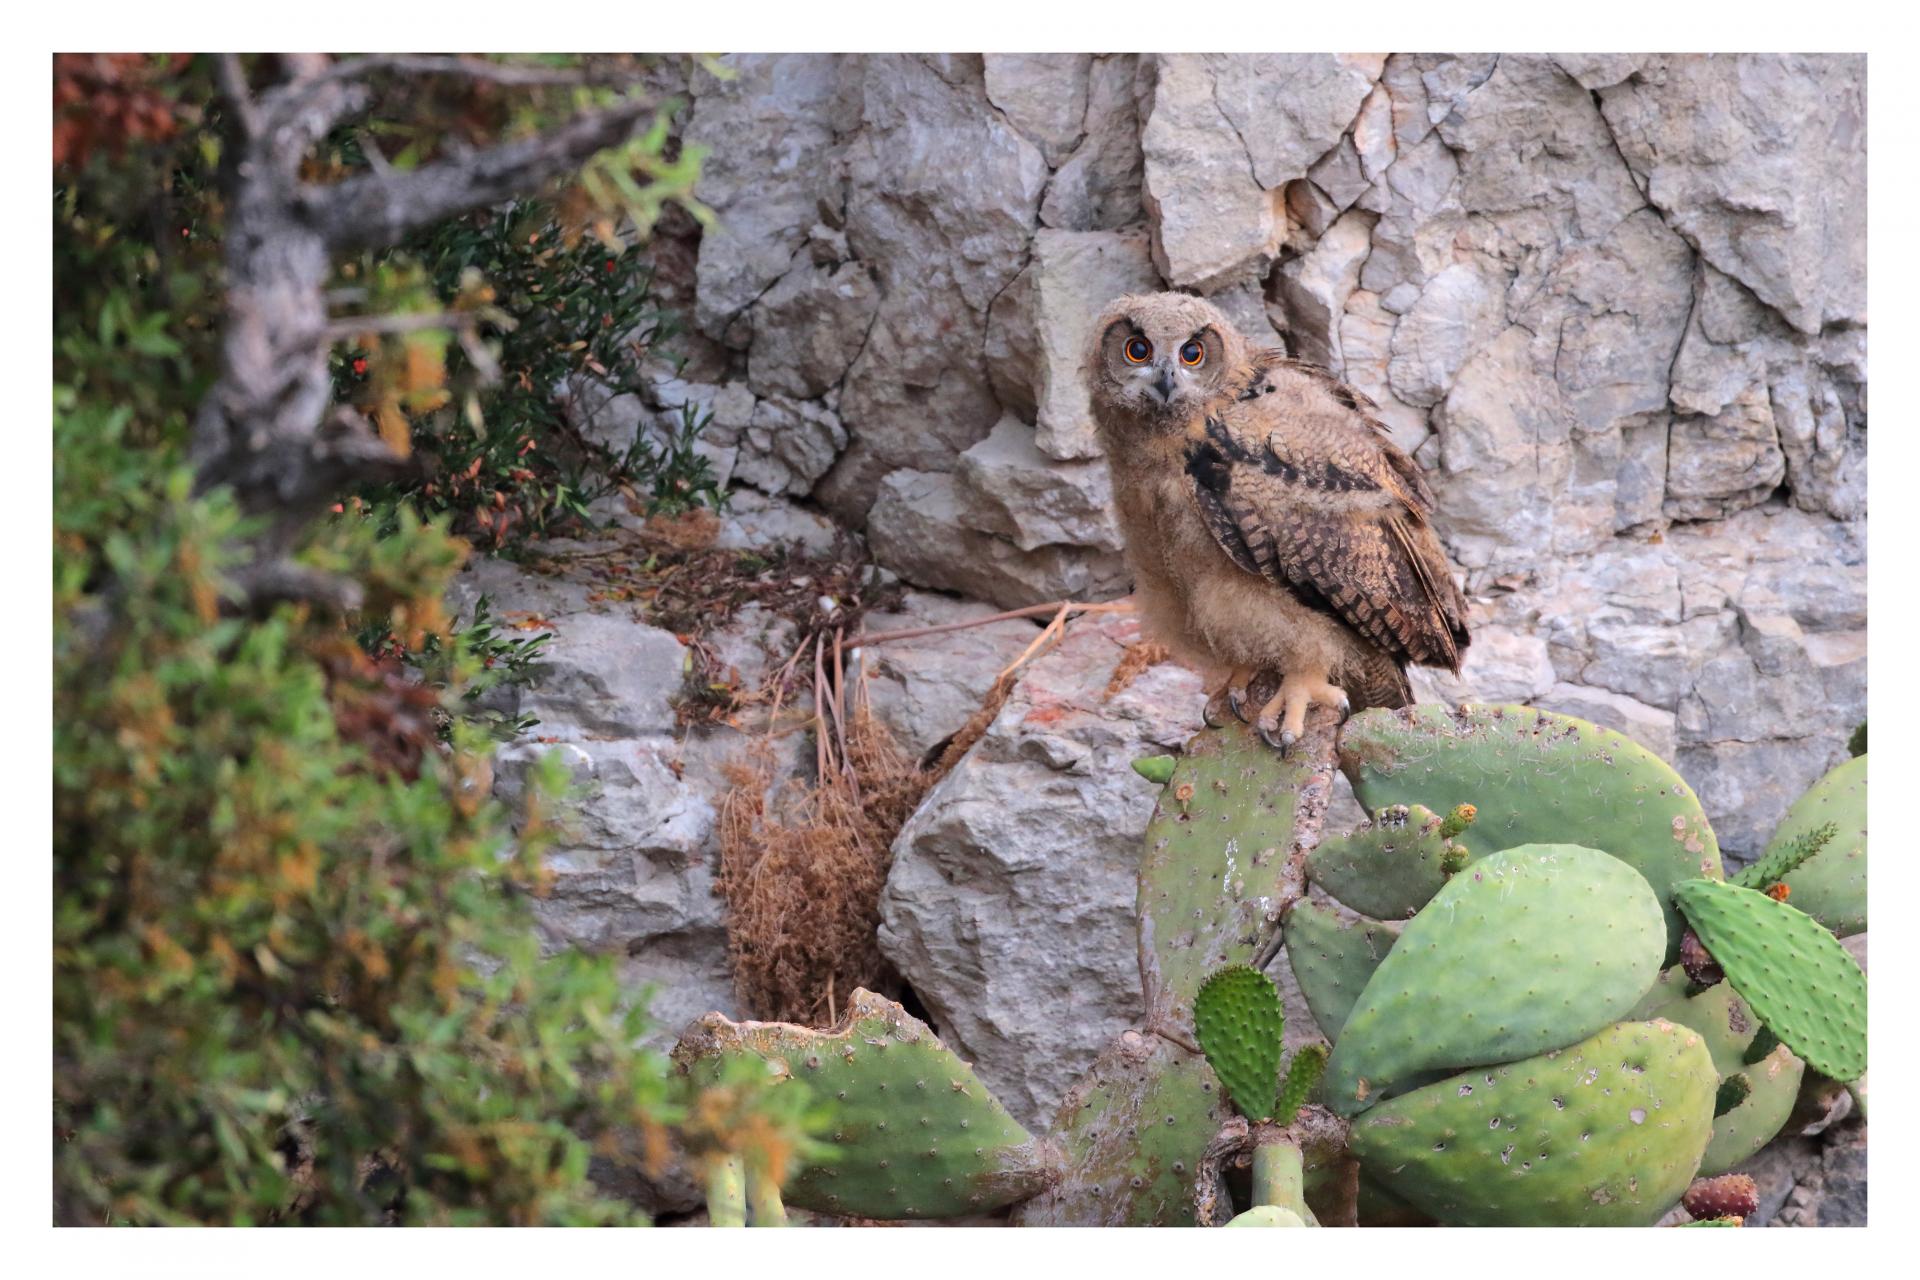 Grand-duc d'Europe Bubo bubo - Eurasian Eagle-Owl